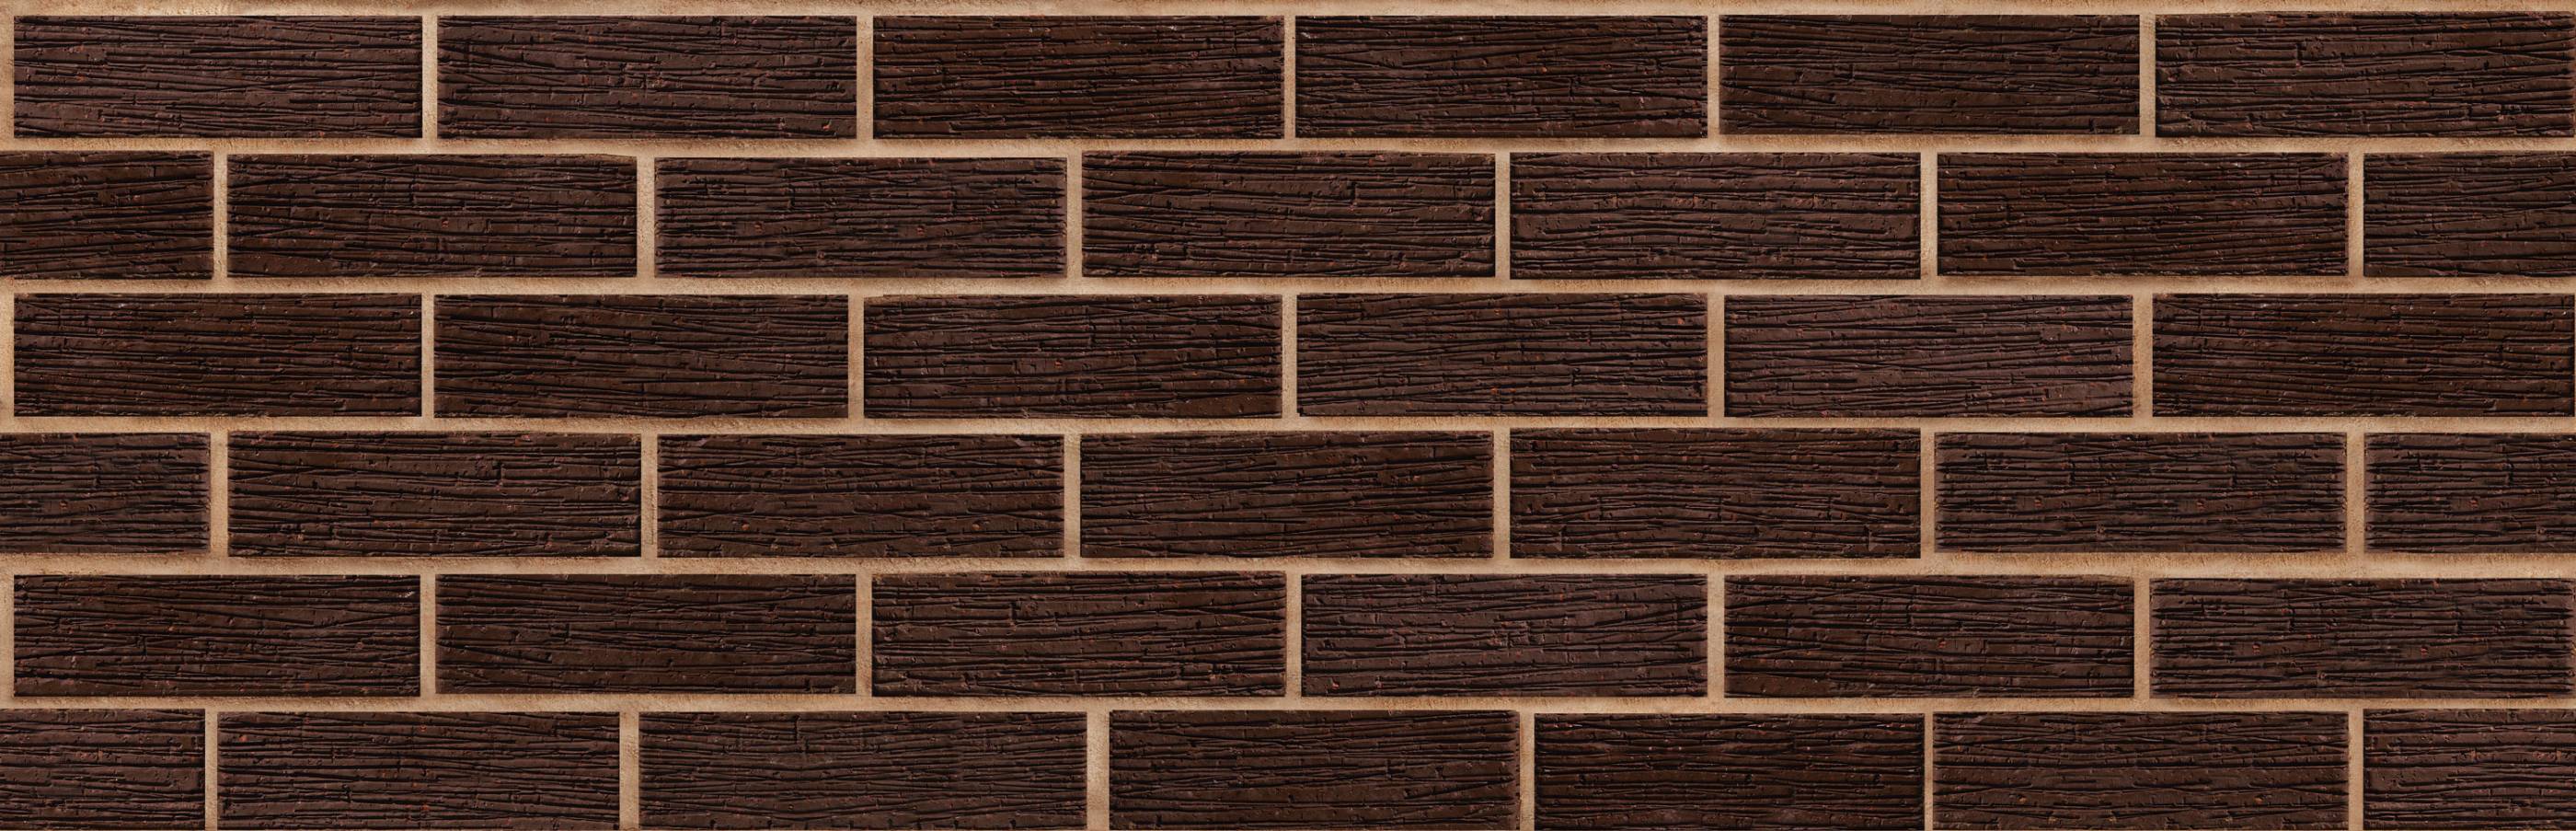 Carlton Crigglestone Brown Clay Brick